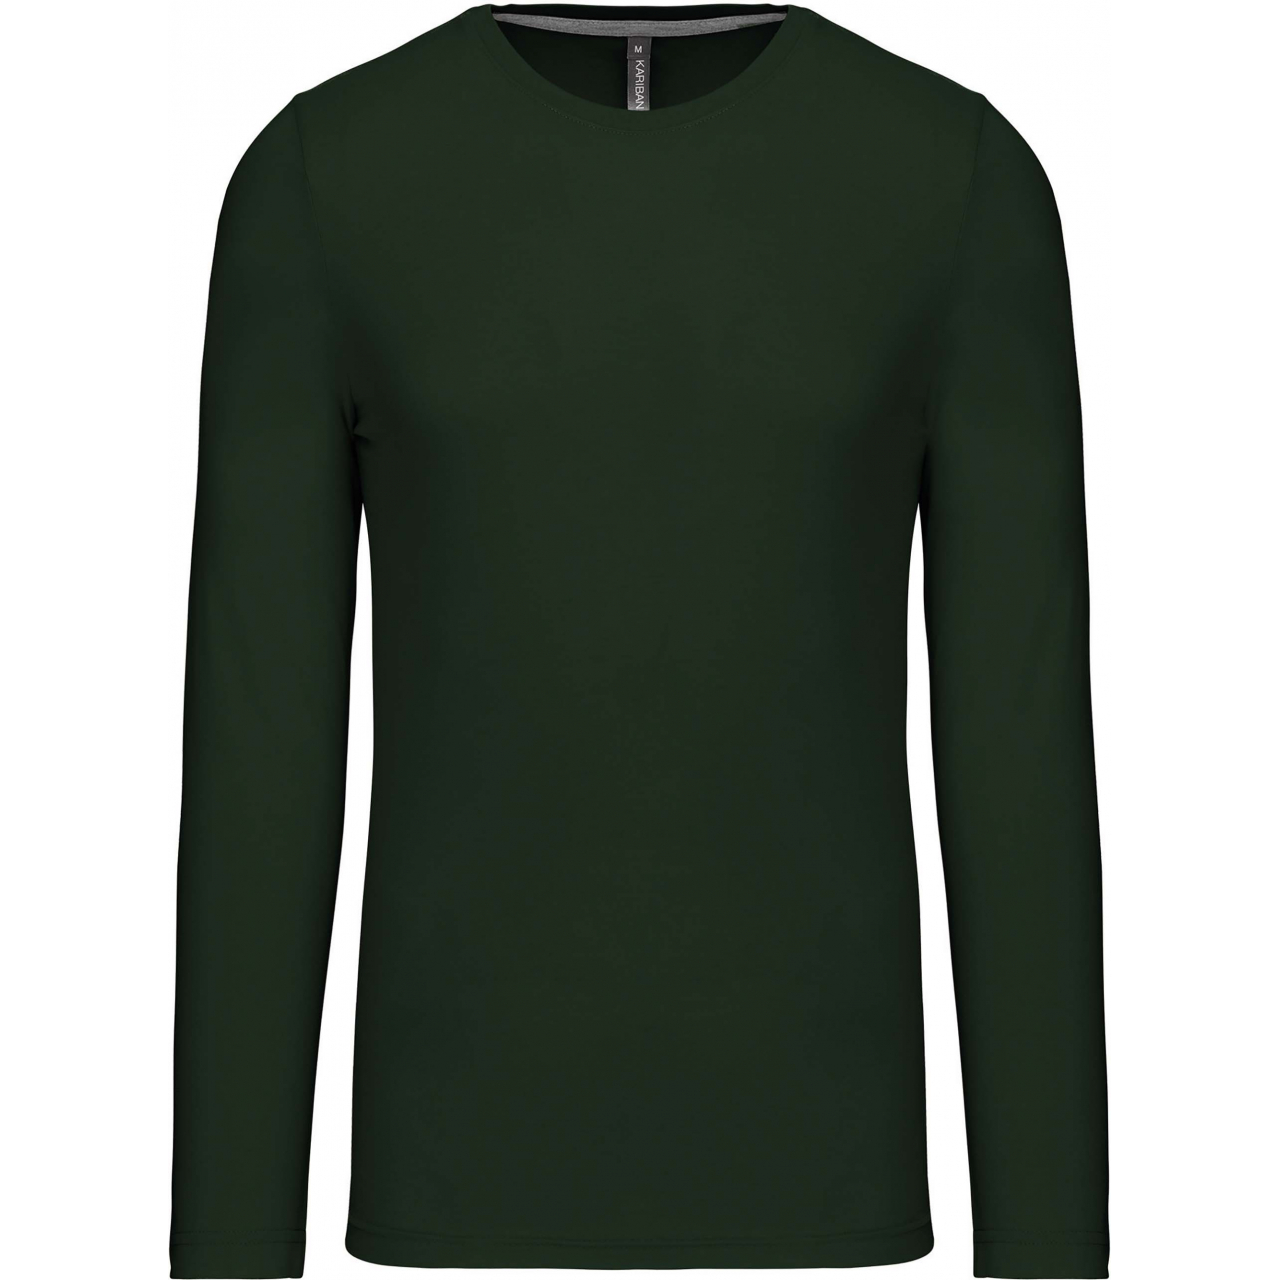 Pánské tričko Kariban dlouhý rukáv - tmavě zelené, 4XL